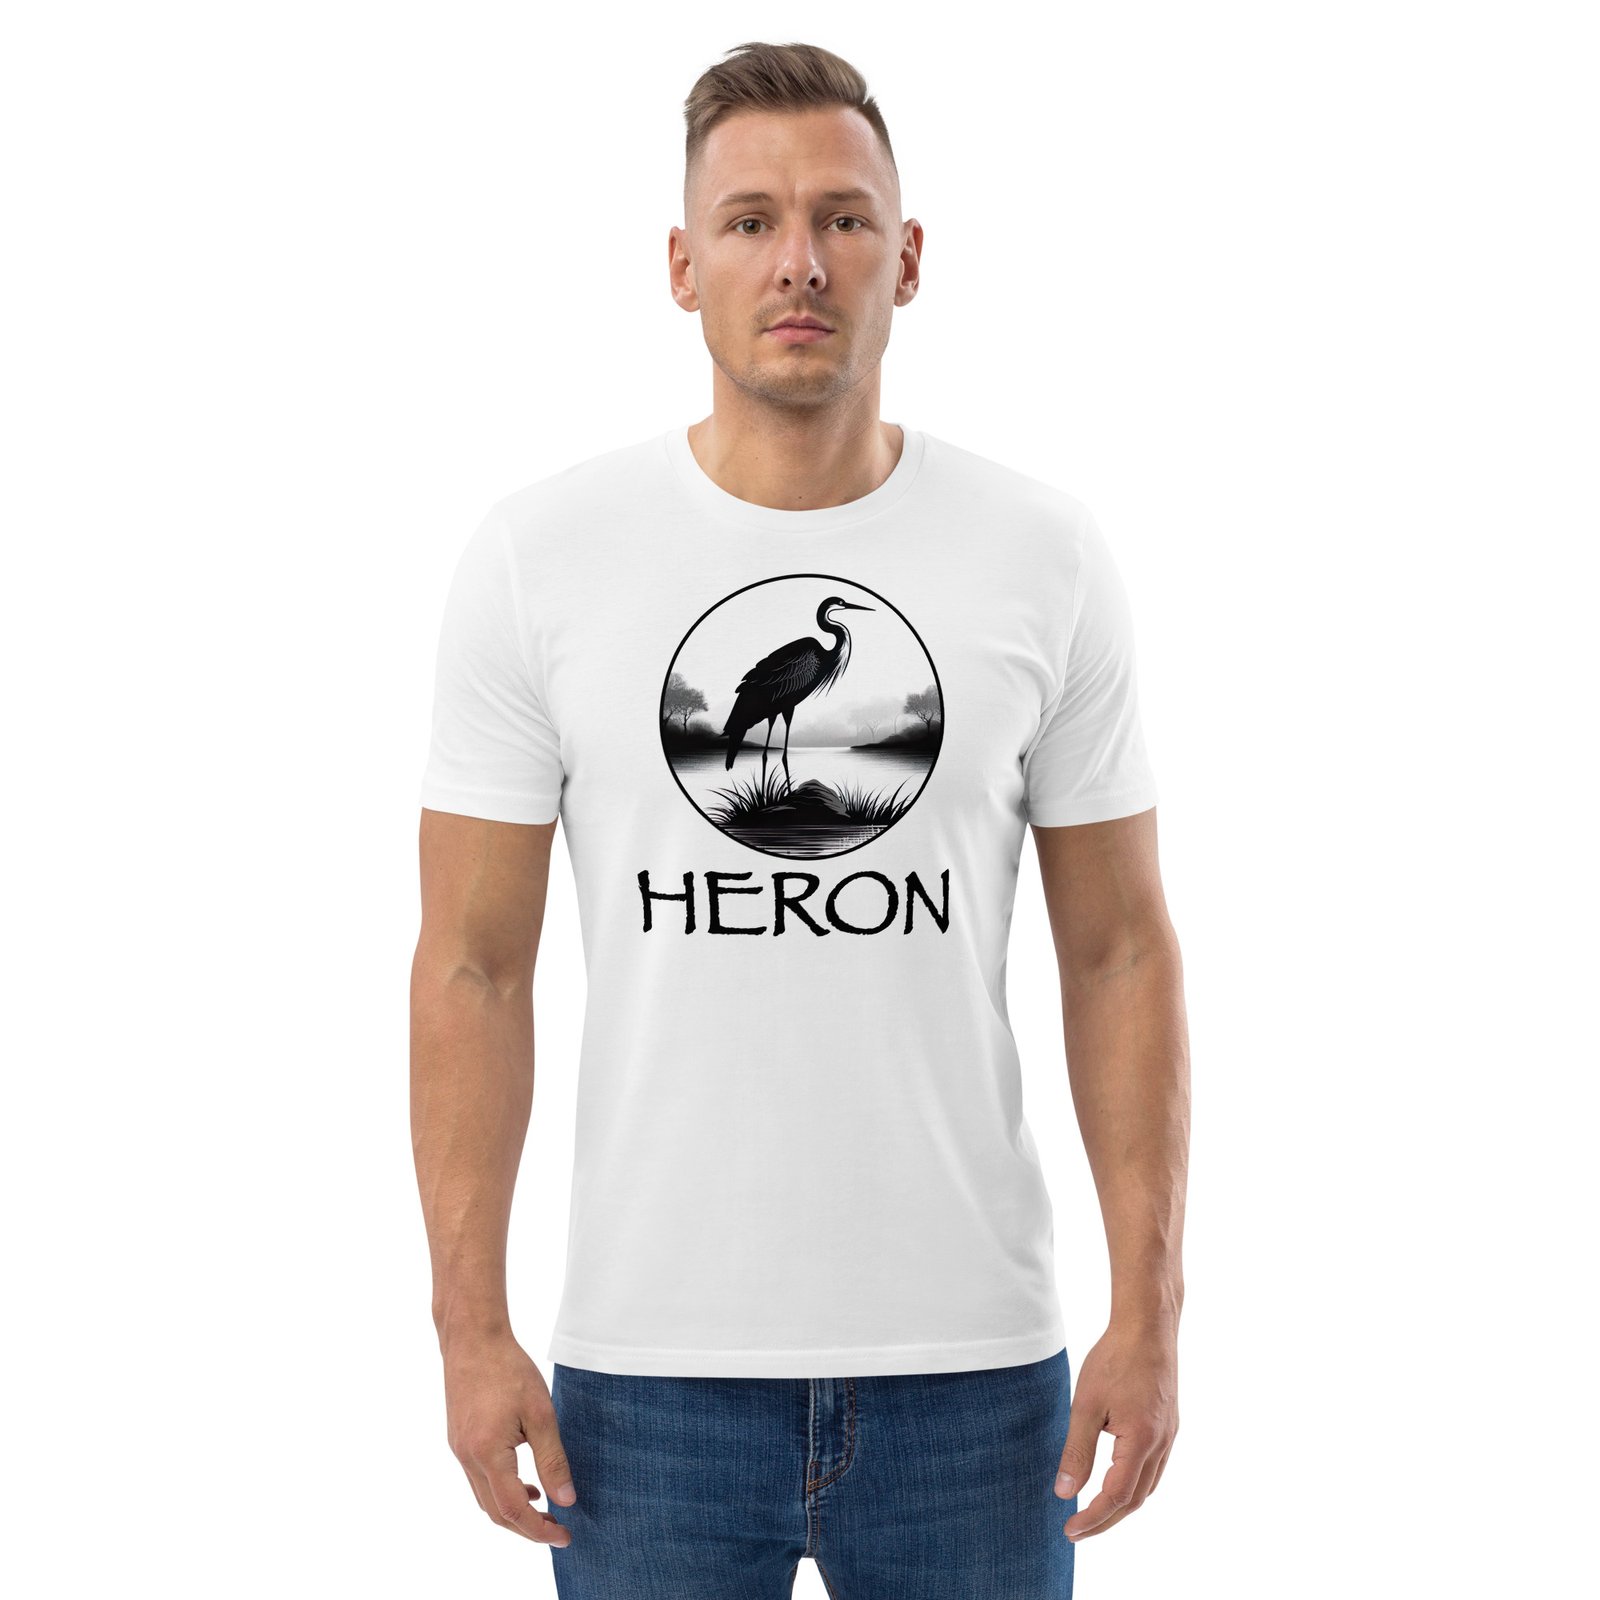 Heron Bird Organic Cotton T-shirt, white